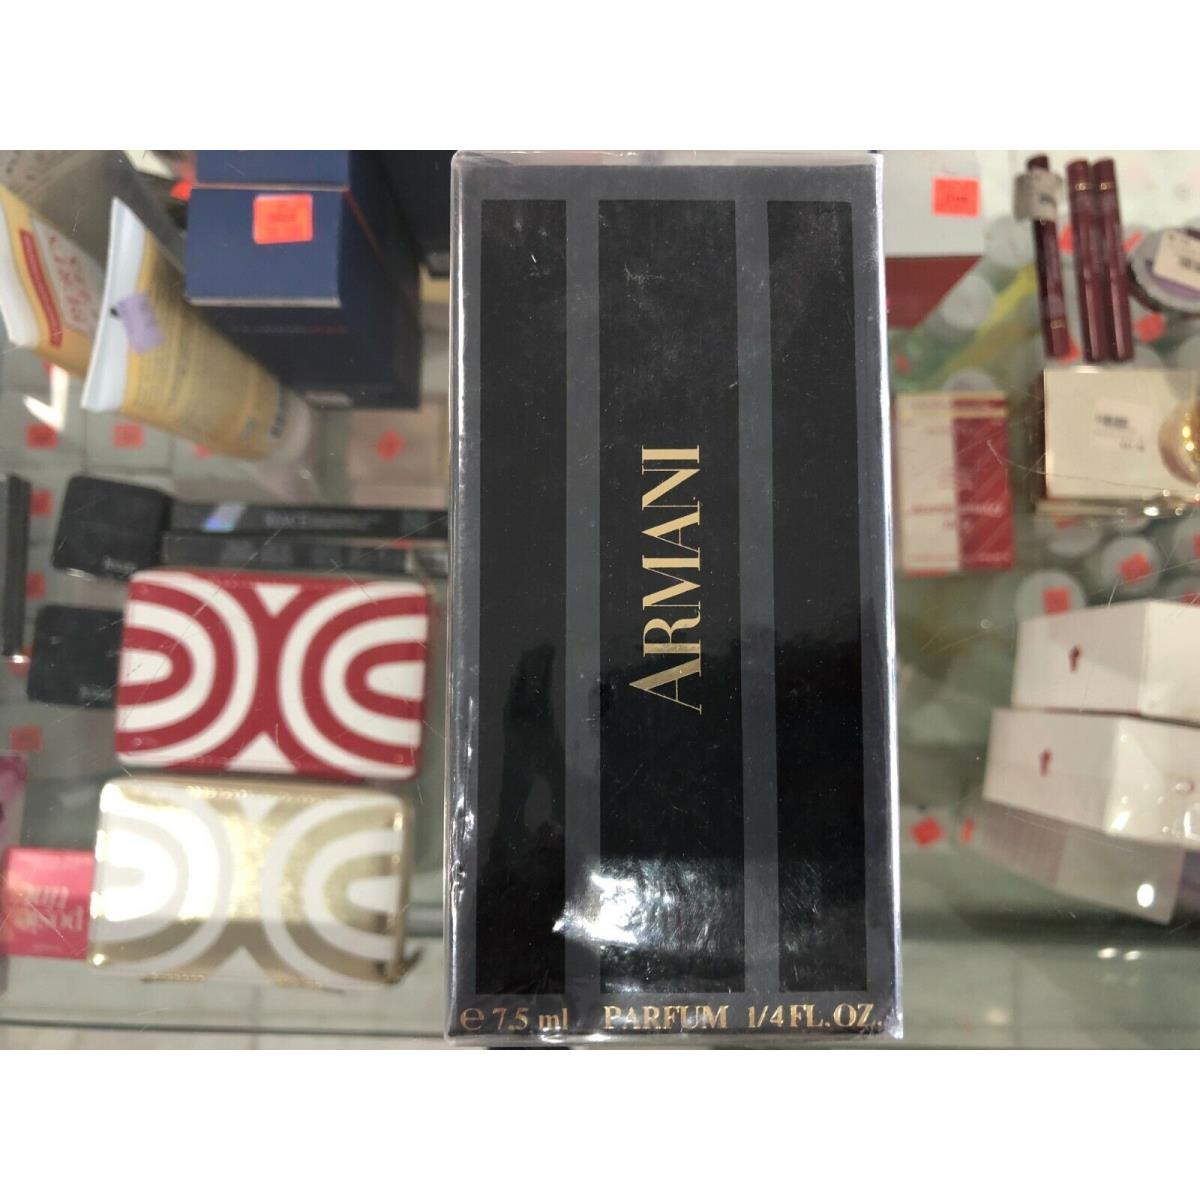 Giorgio Armani perfume,cologne,fragrance,parfum  1